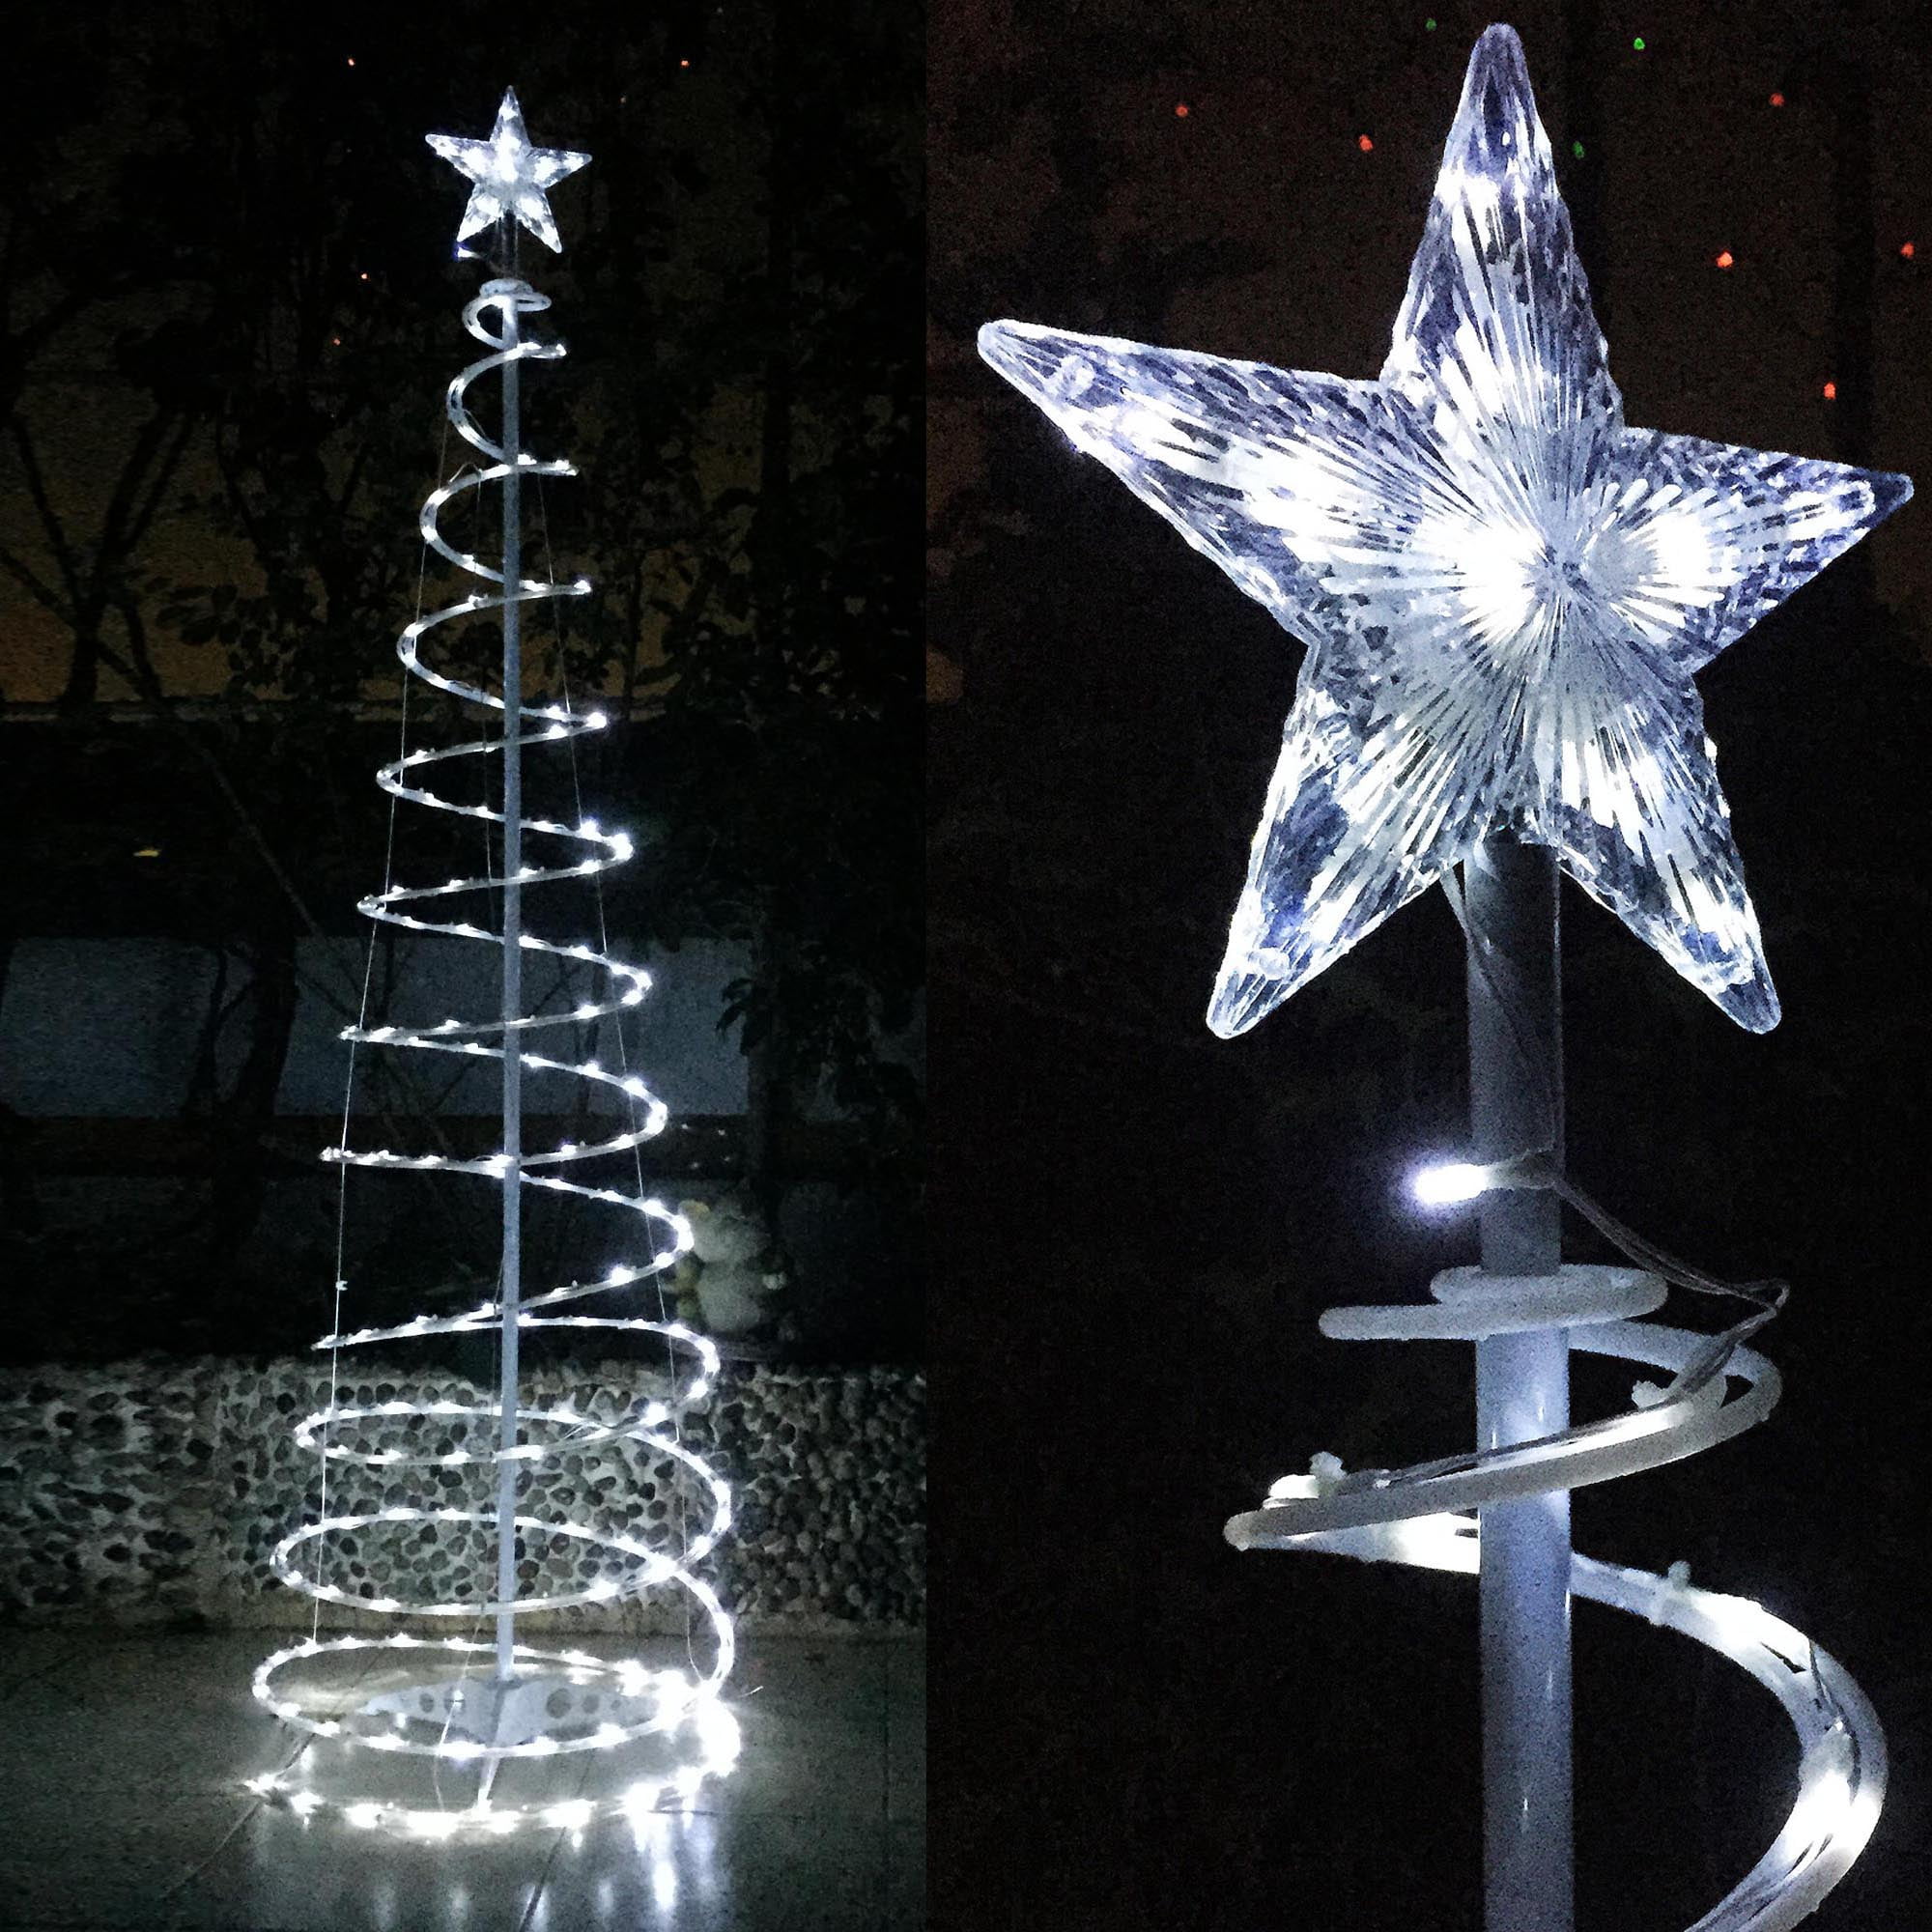 Yescom 6ft Led Spiral Christmas Tree Light Indoor Outdoor Yard Xmas Holiday Art Decoration Lamp Walmart Com Walmart Com